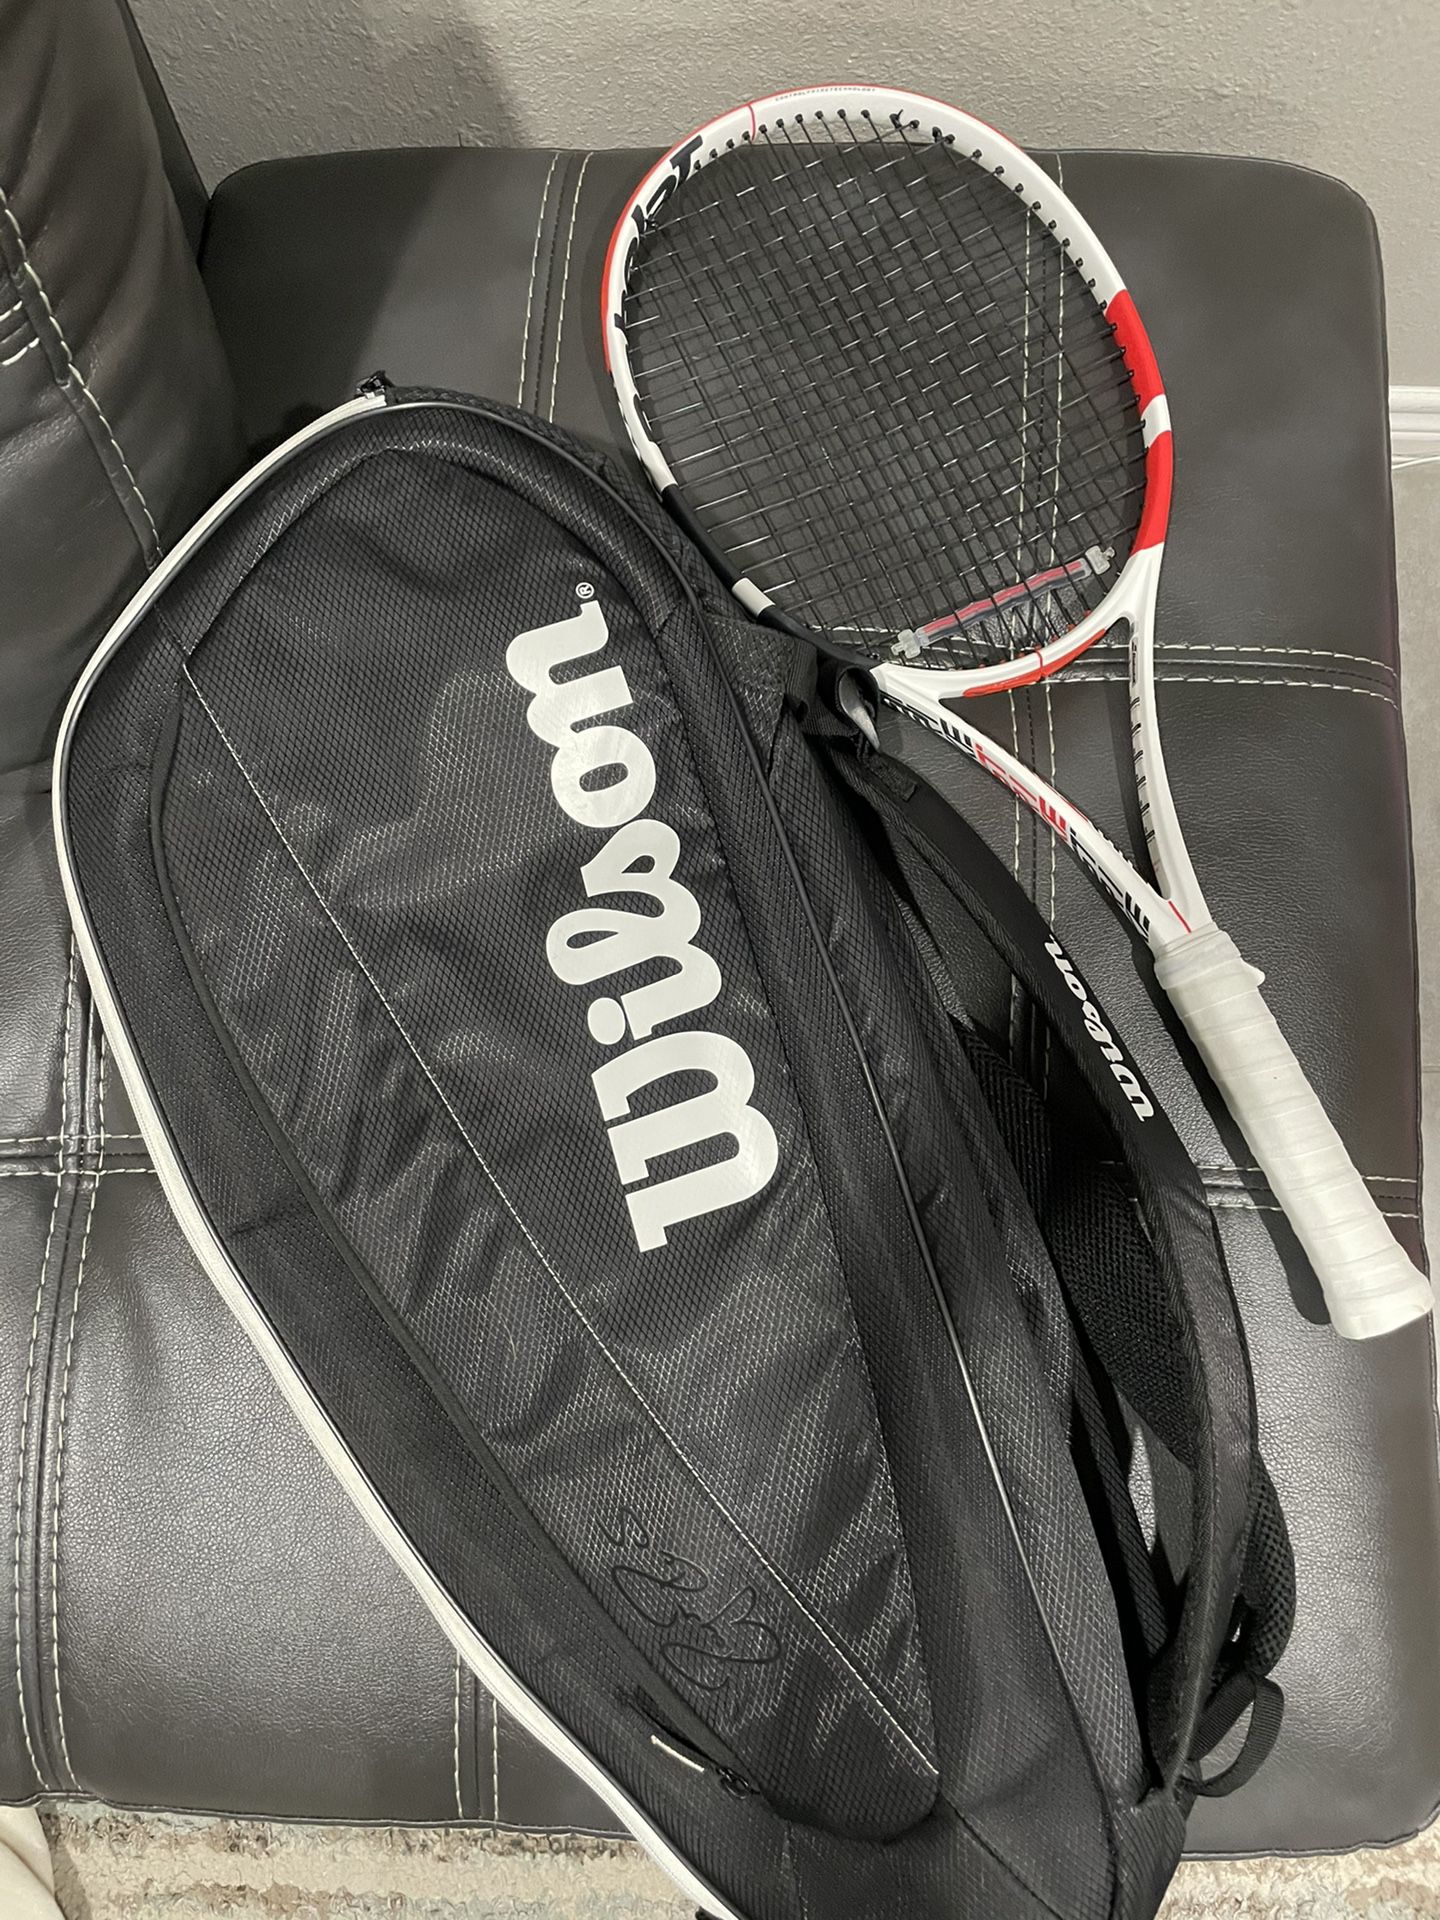 Babalot Tennis racket